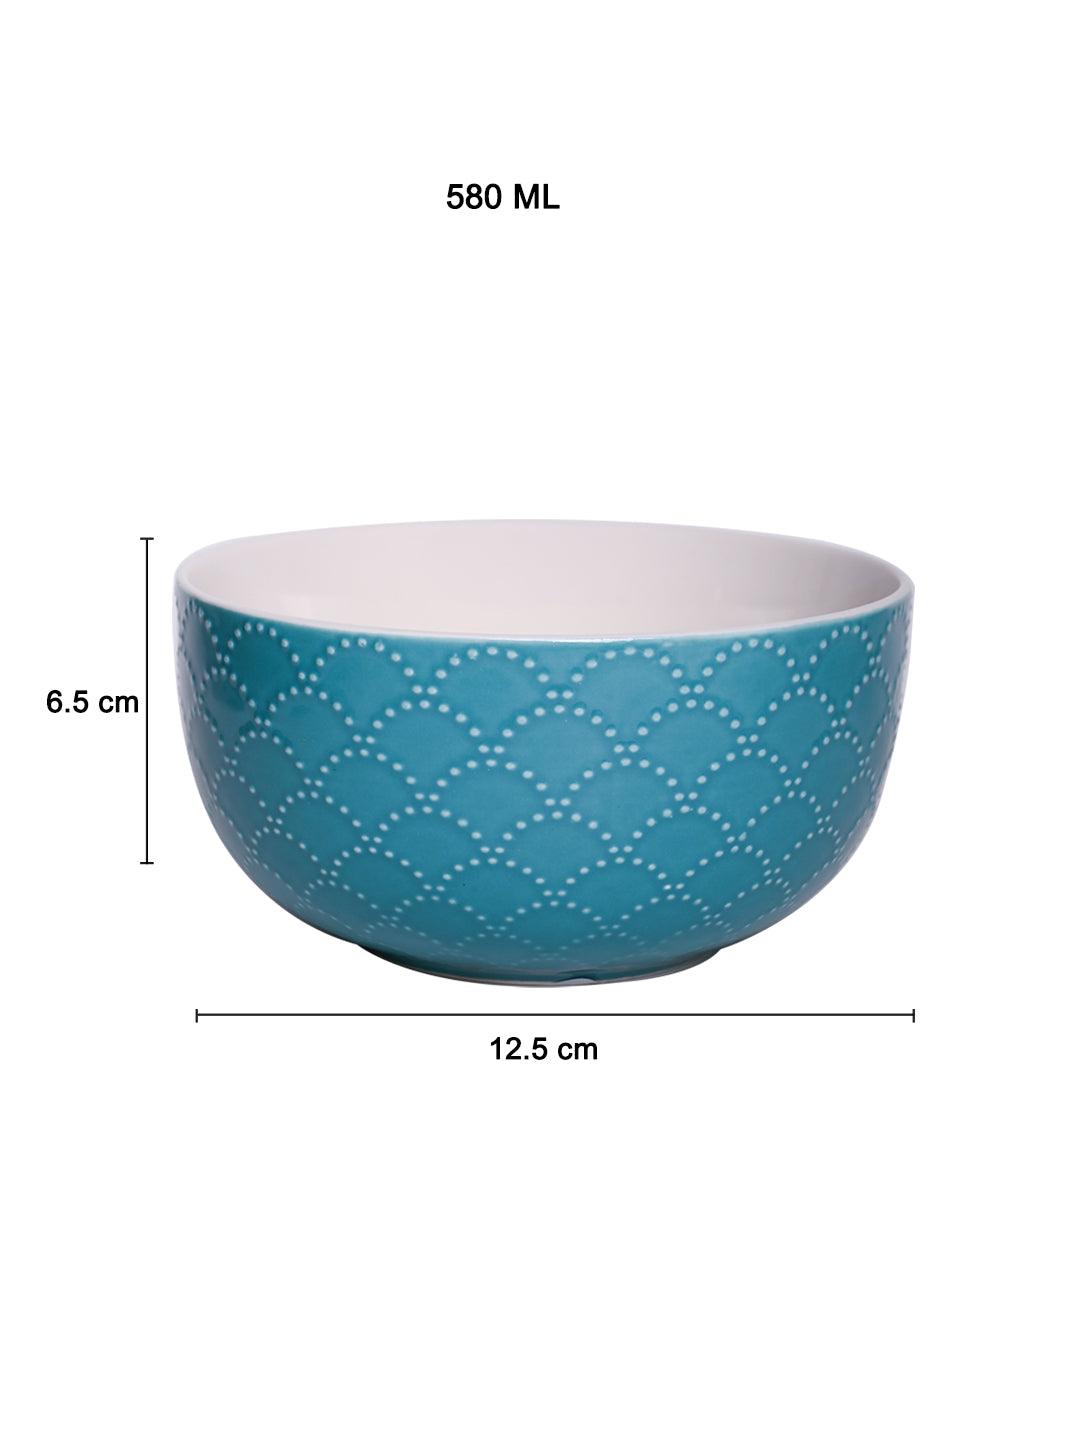 Turquoise Ceramic Bowl - 580Ml, Fish Scale - MARKET 99